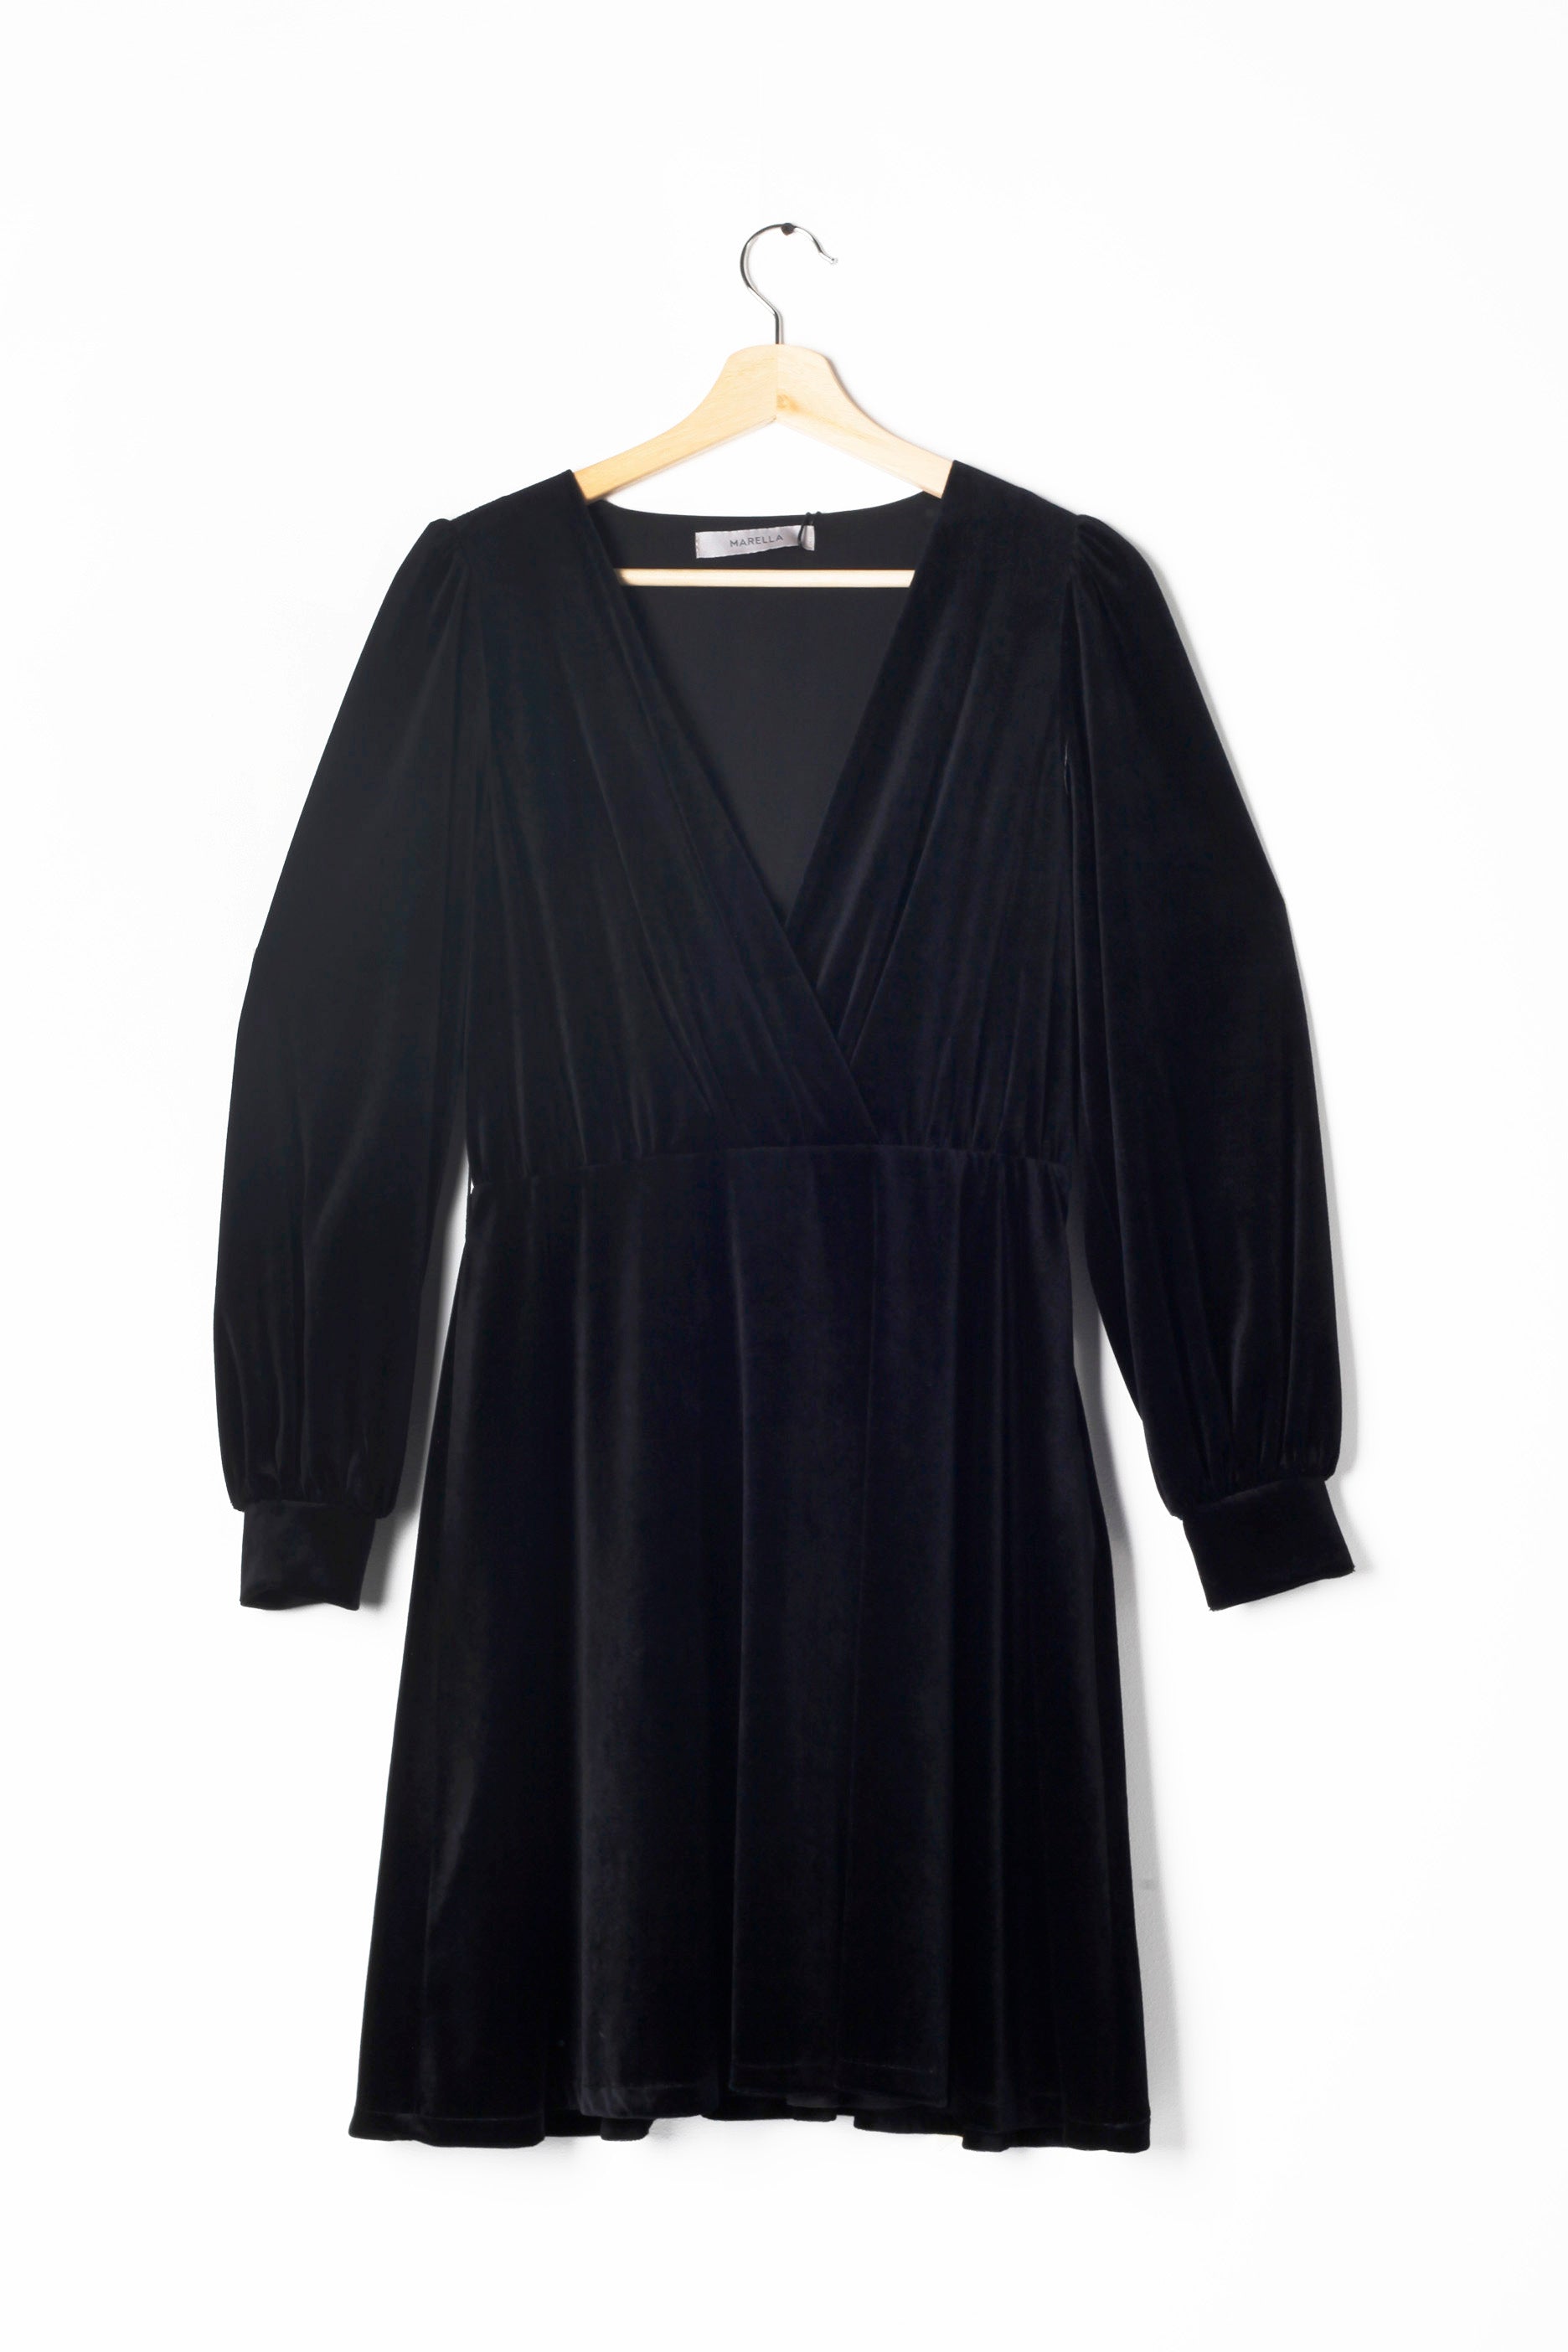 Black Velvet Marella Short Dress (small)